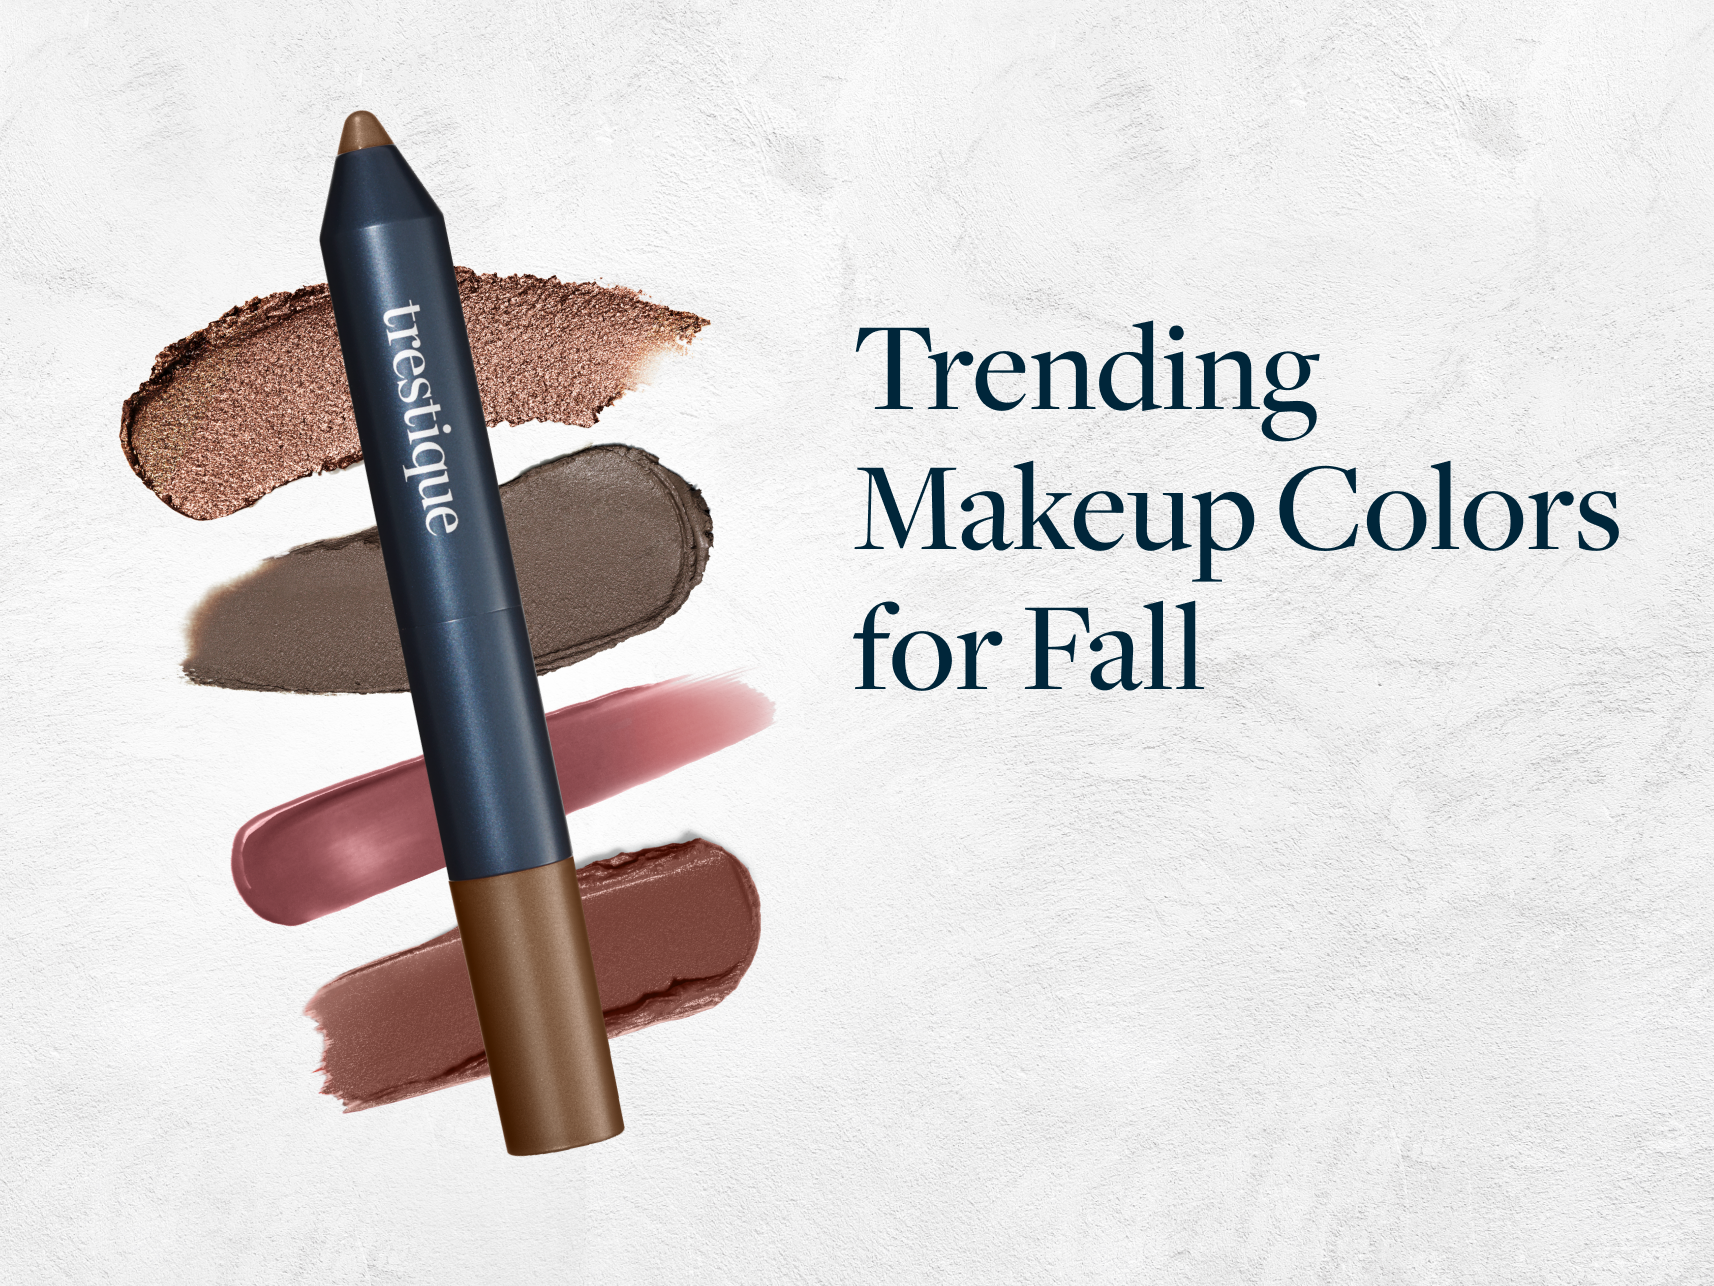 Trending Makeup Colors for Fall